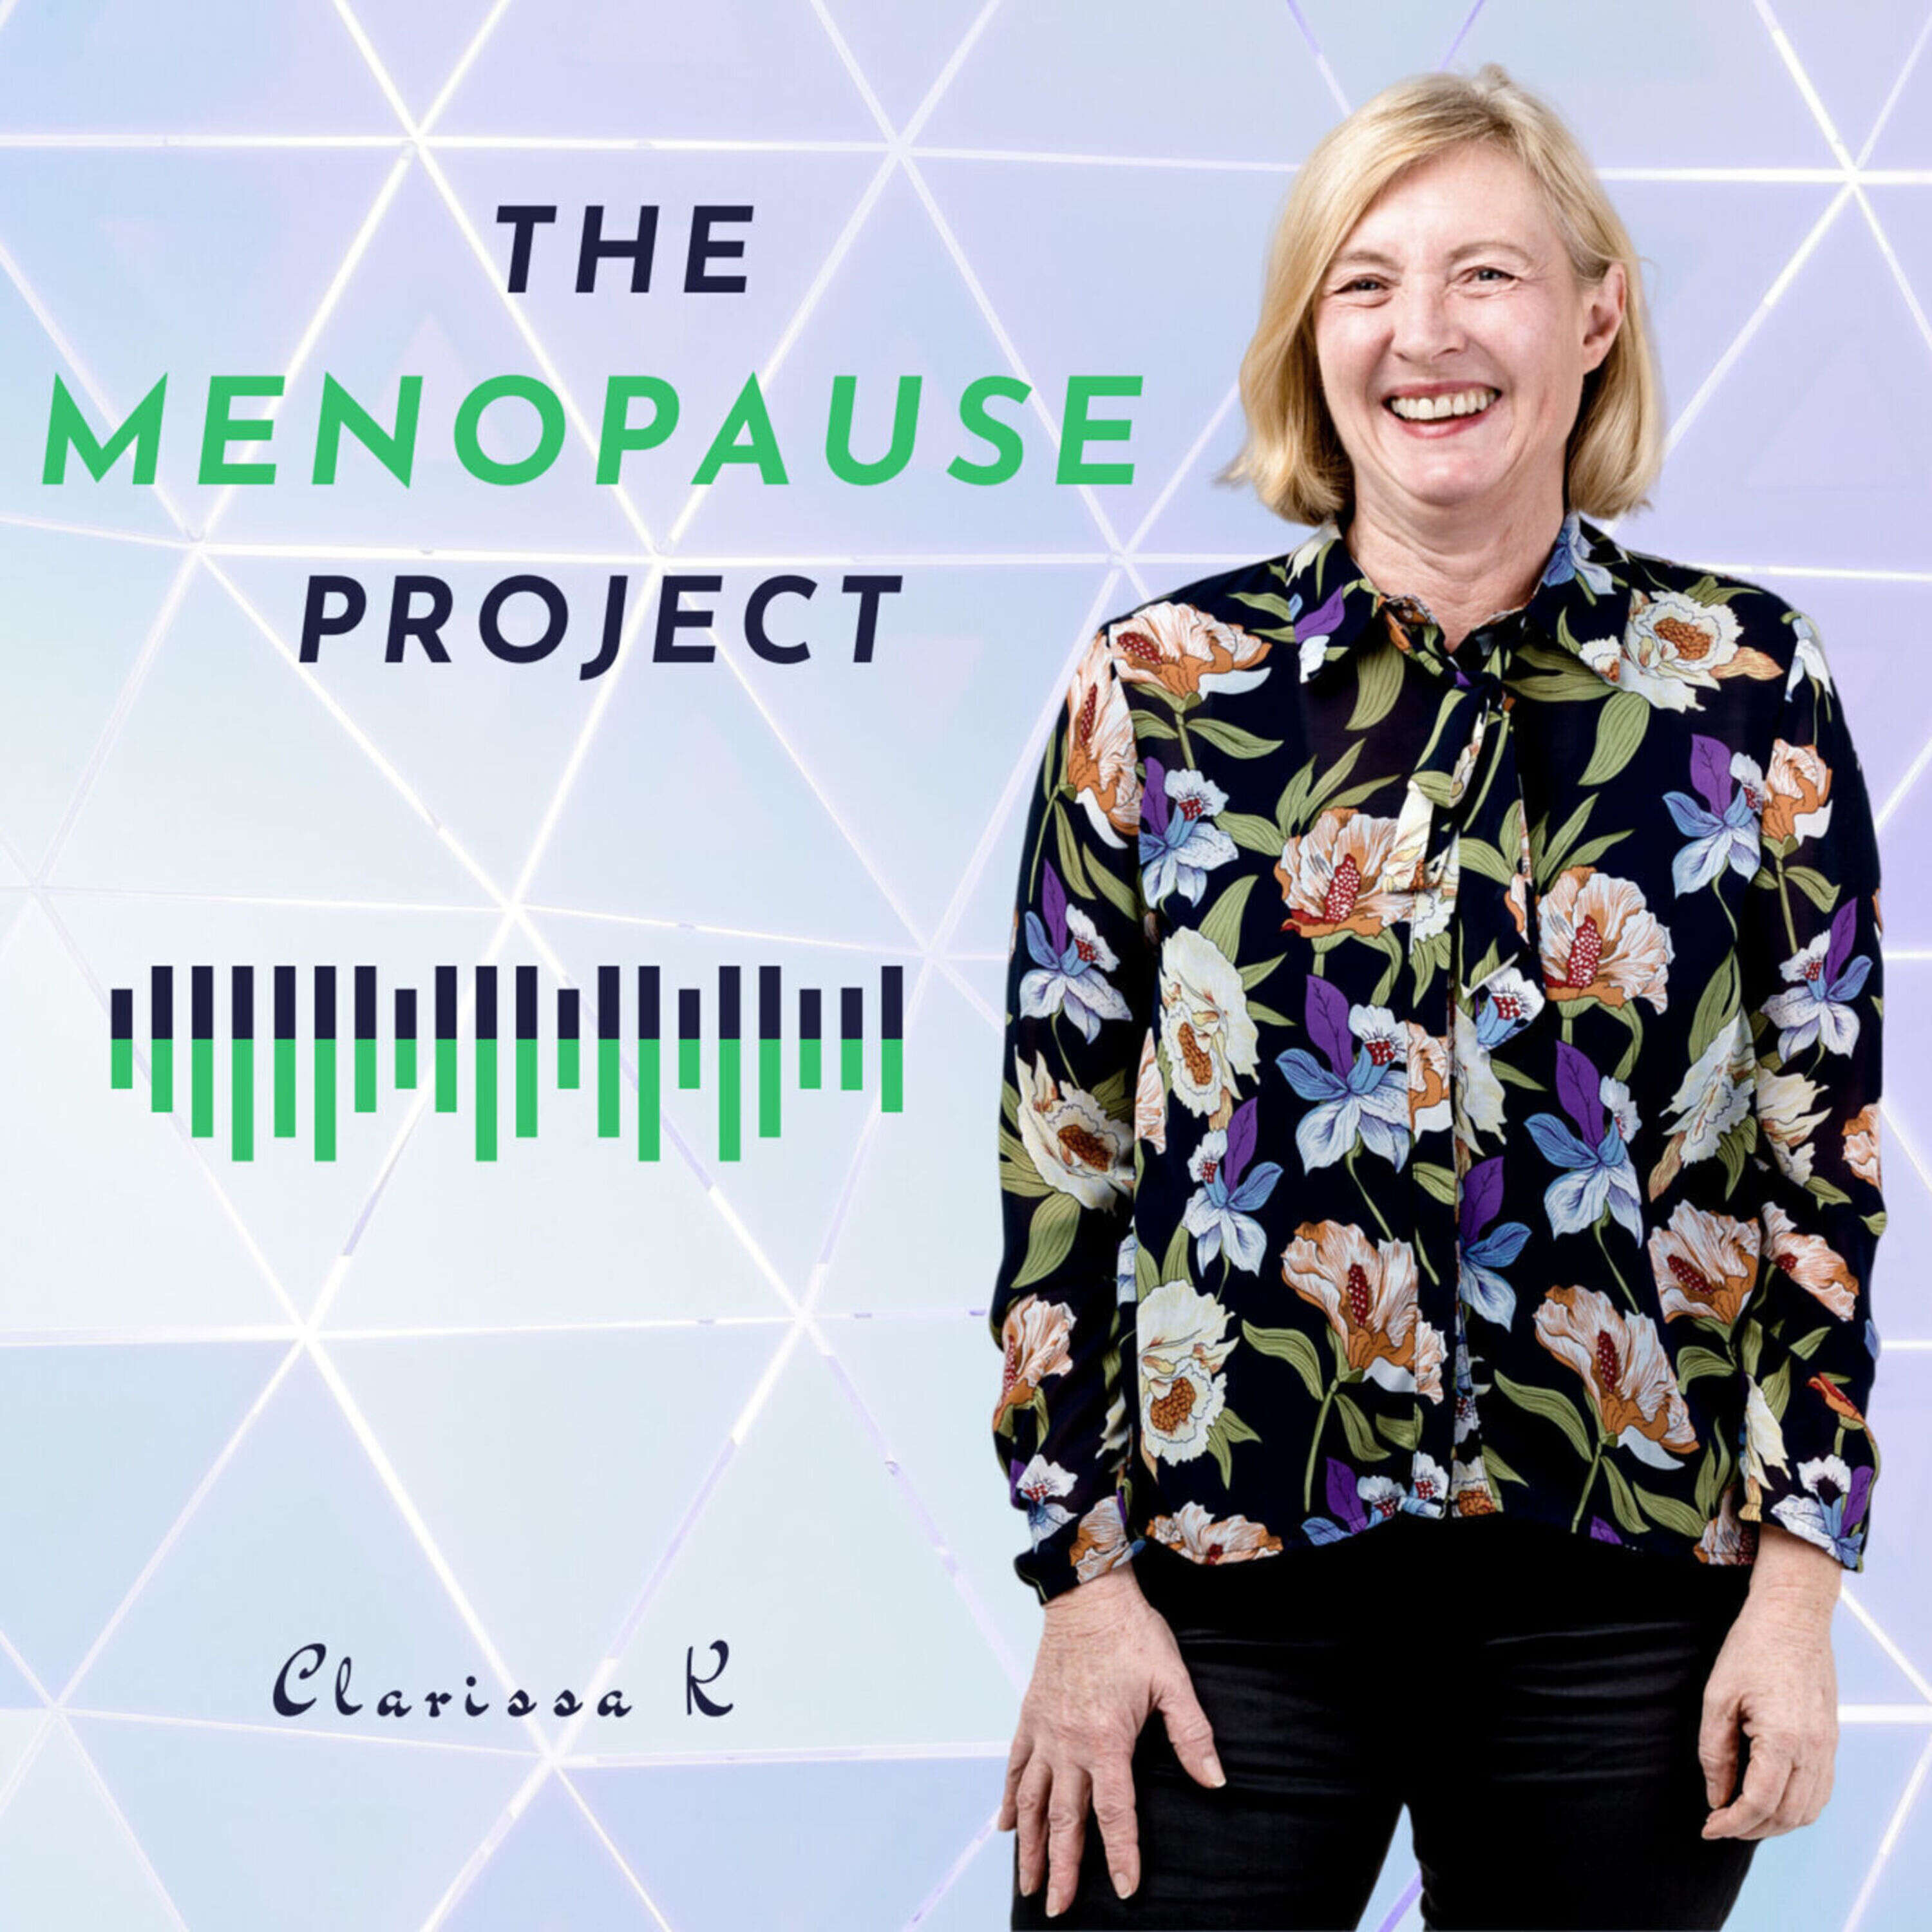 Cracking Open the Conversation on Perimenopause ând Menopause